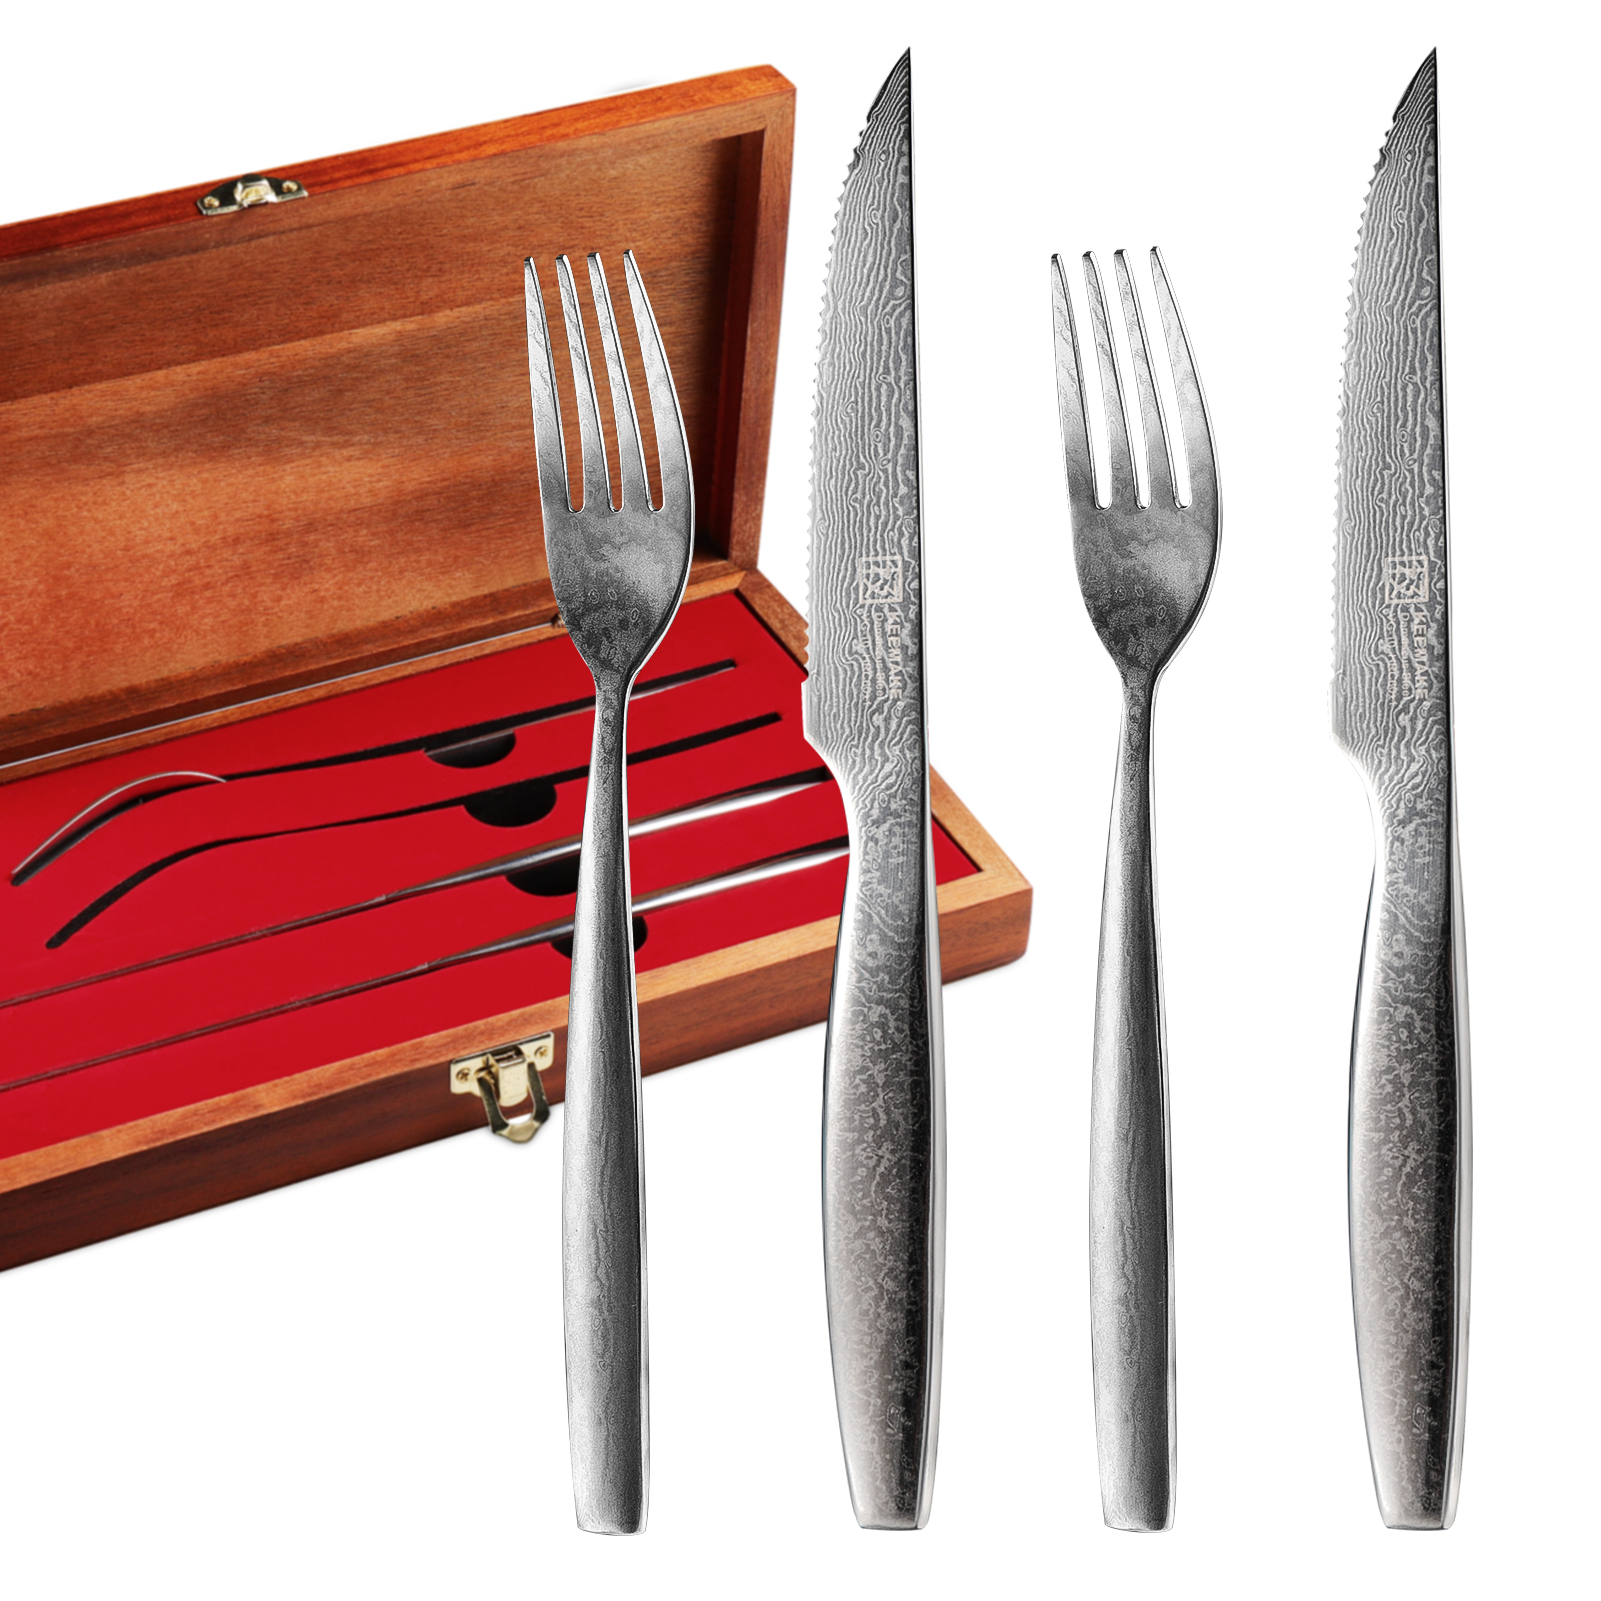 KEEMAKE Damascus 2pcs steak knives & 2pcs forks set with wooden box